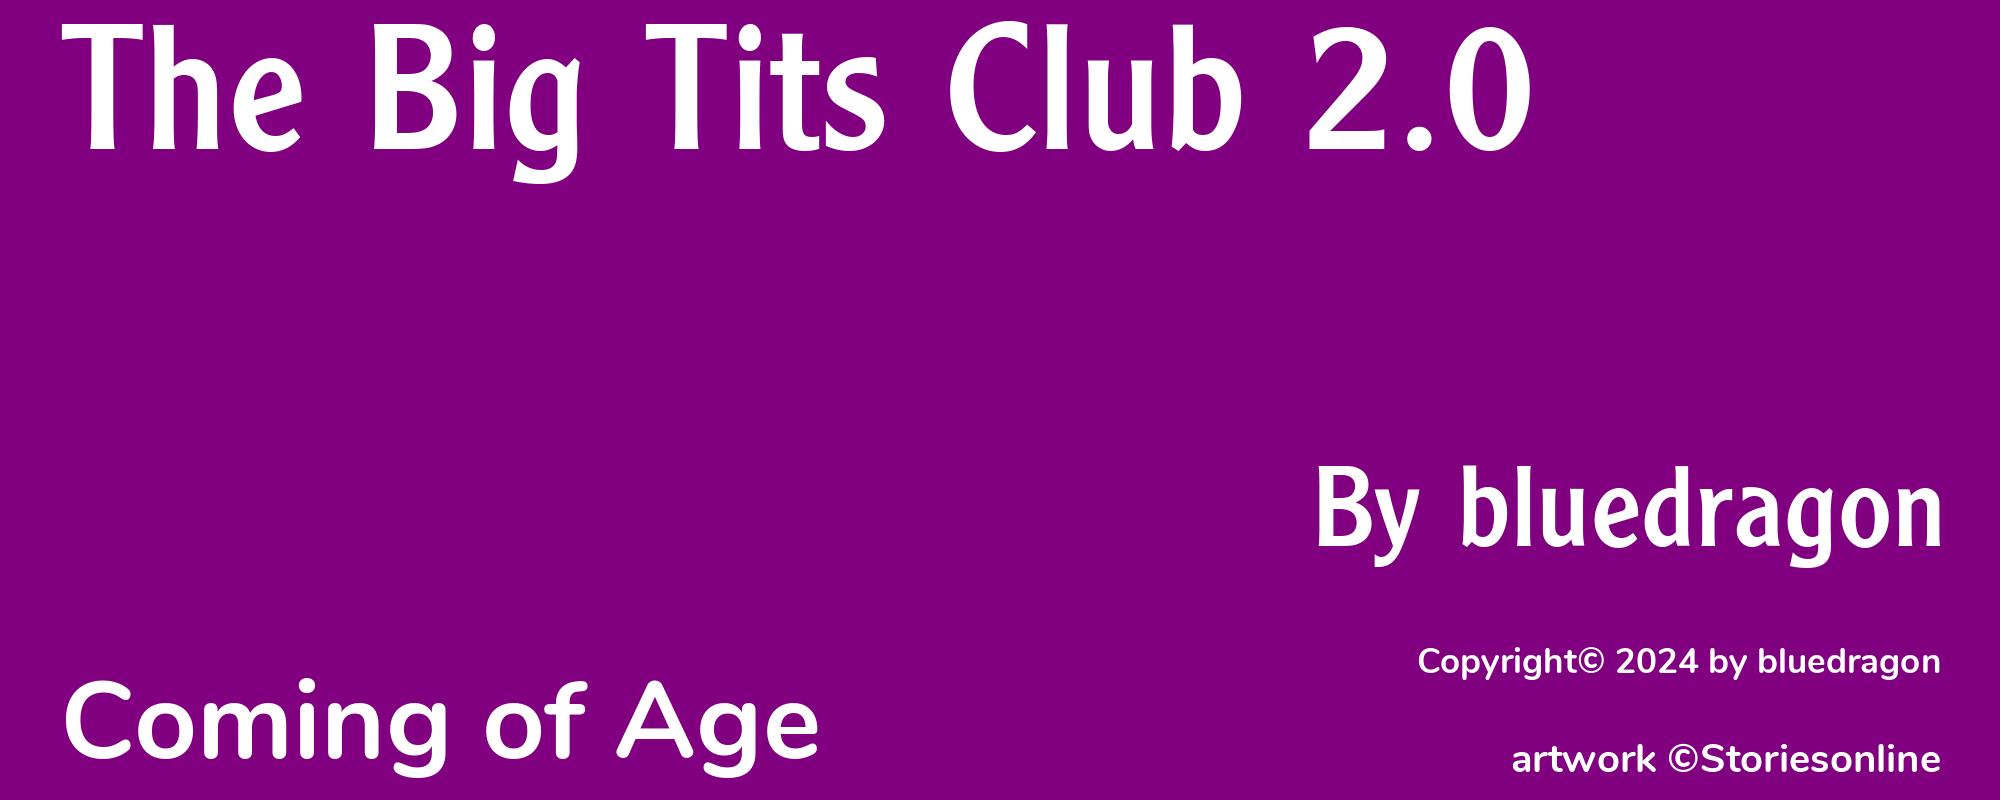 The Big Tits Club 2.0 - Cover